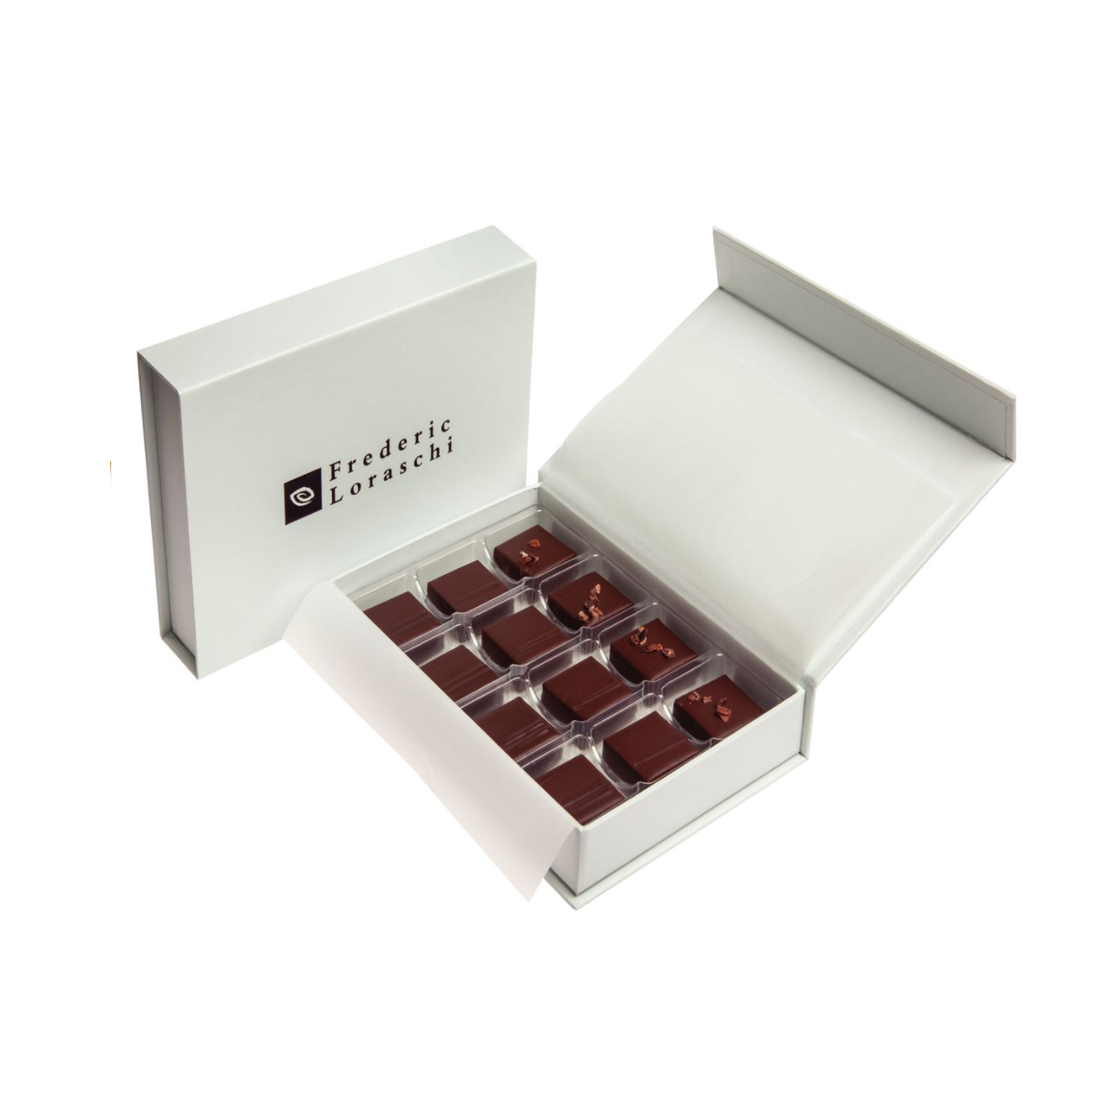 Cajas de chocolate magnéticas personalizadas